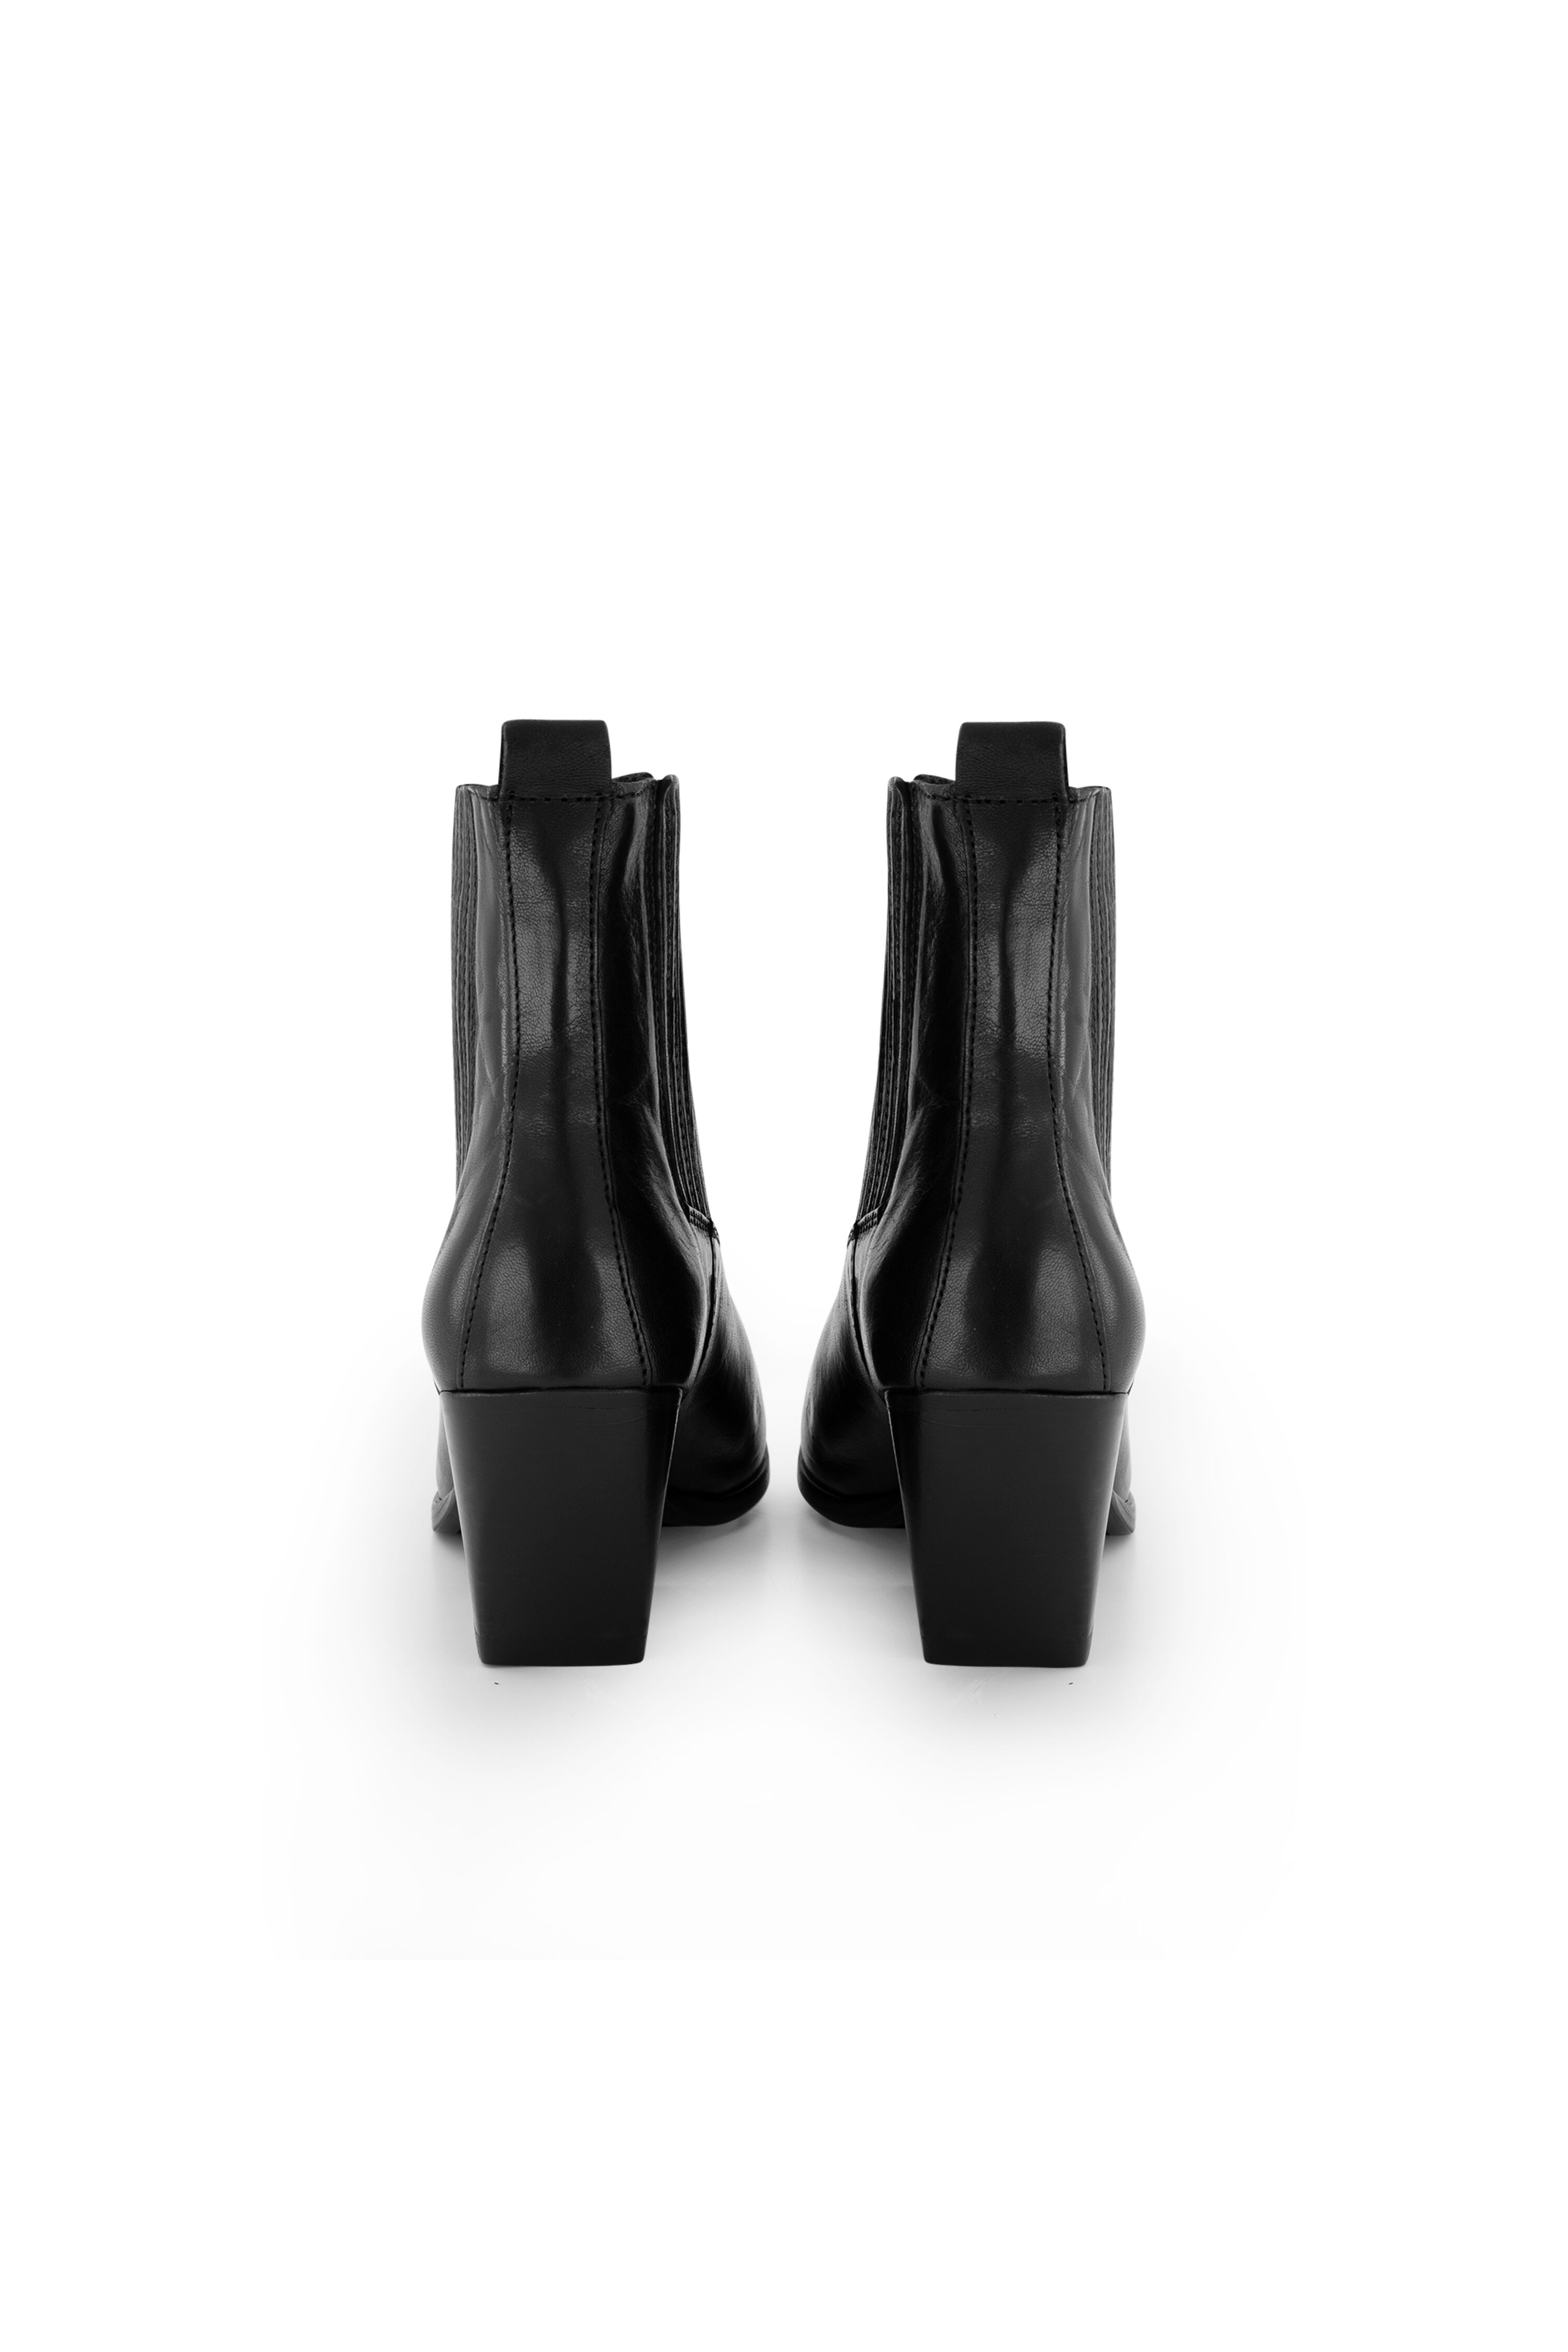 Catarina Martins Cabbage Leather Boot Elastic Black | Bloom Fashion